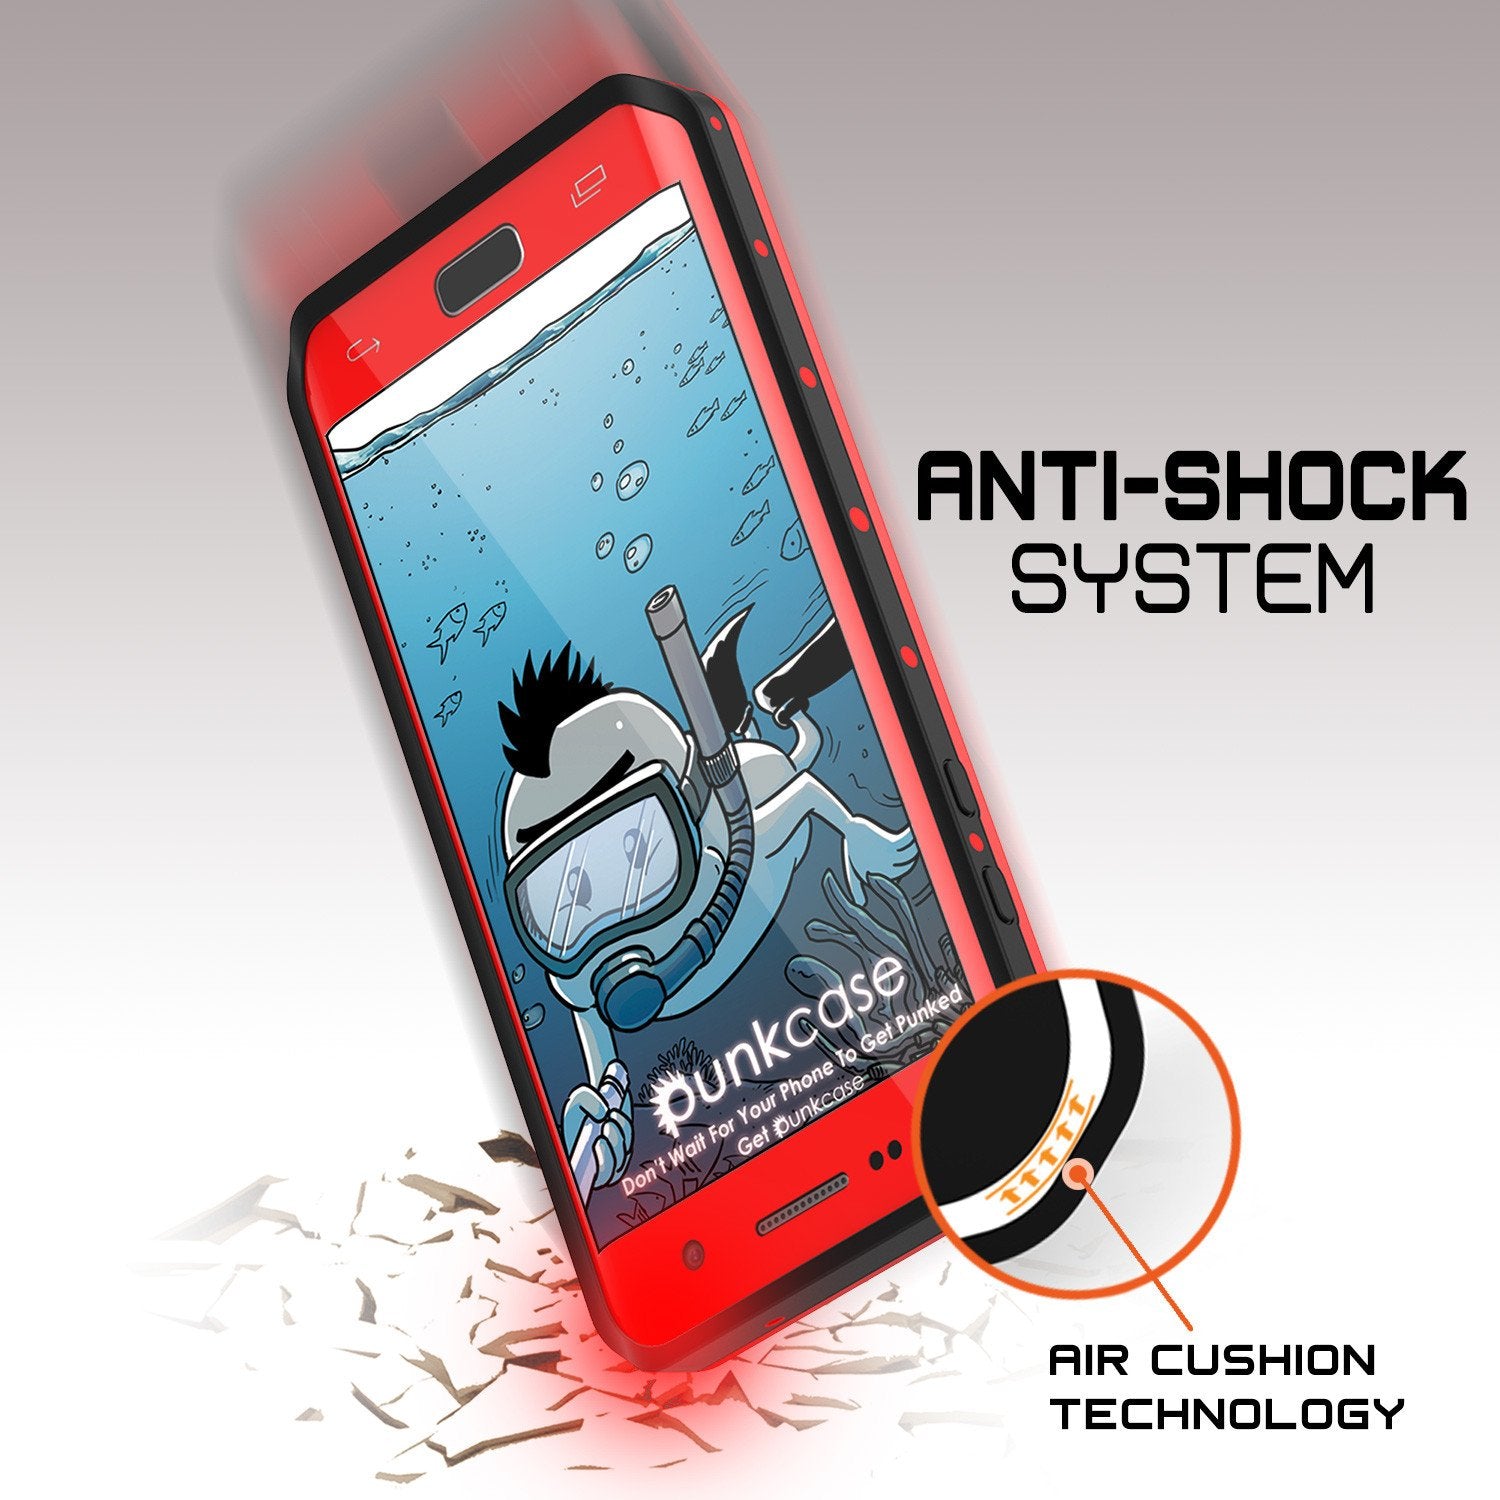 Galaxy S7 EDGE Waterproof Case PunkCase StudStar Red Thin 6.6ft Underwater IP68 Shock/Snow Proof